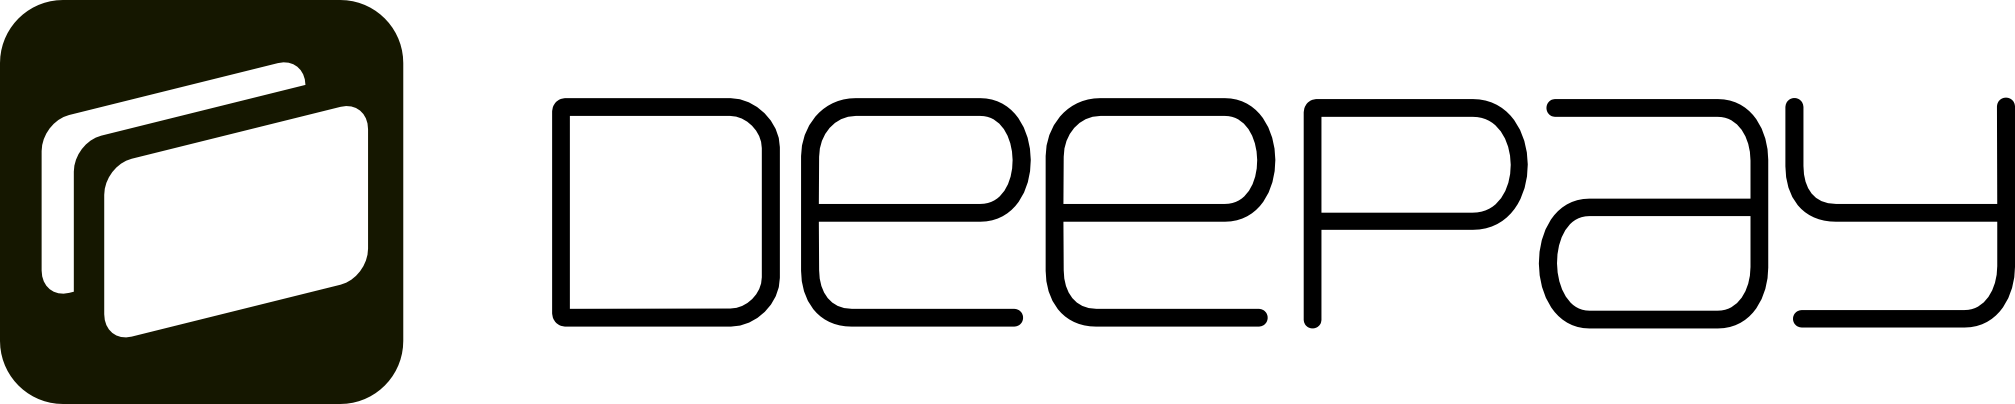 DeePay logo horizontal 01 black